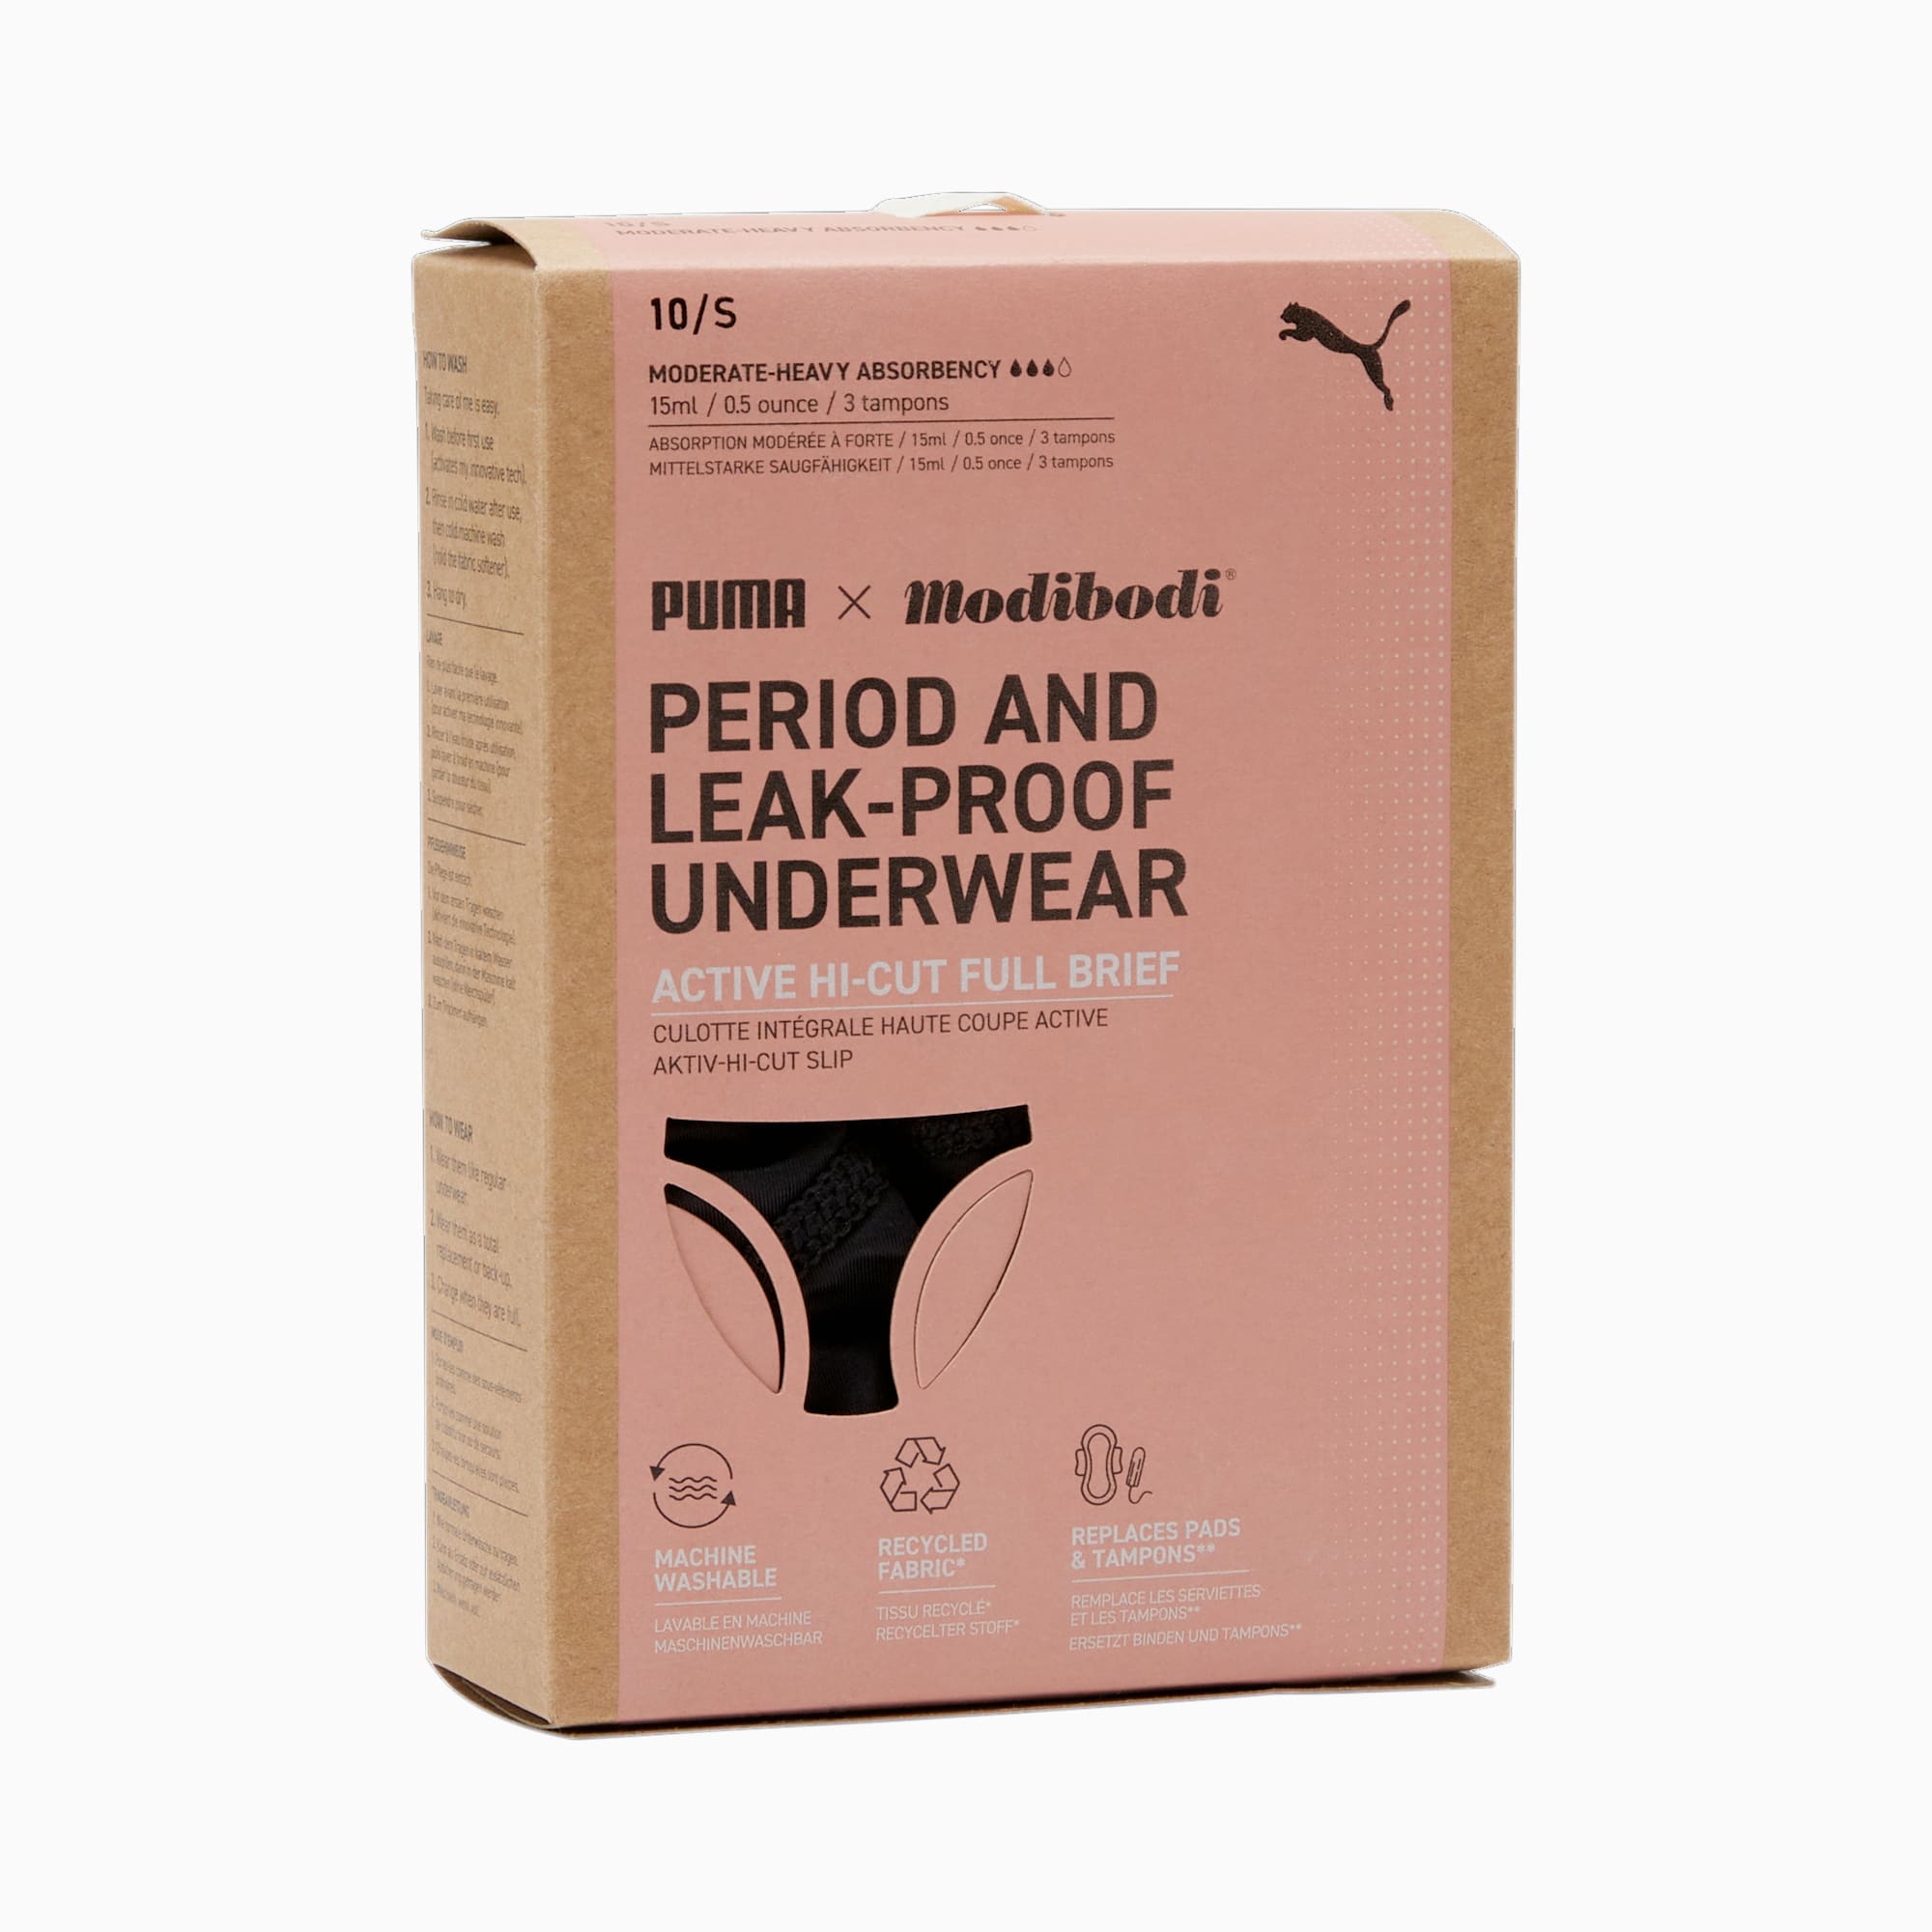 Puma wholesale underwear assortment 36 packs